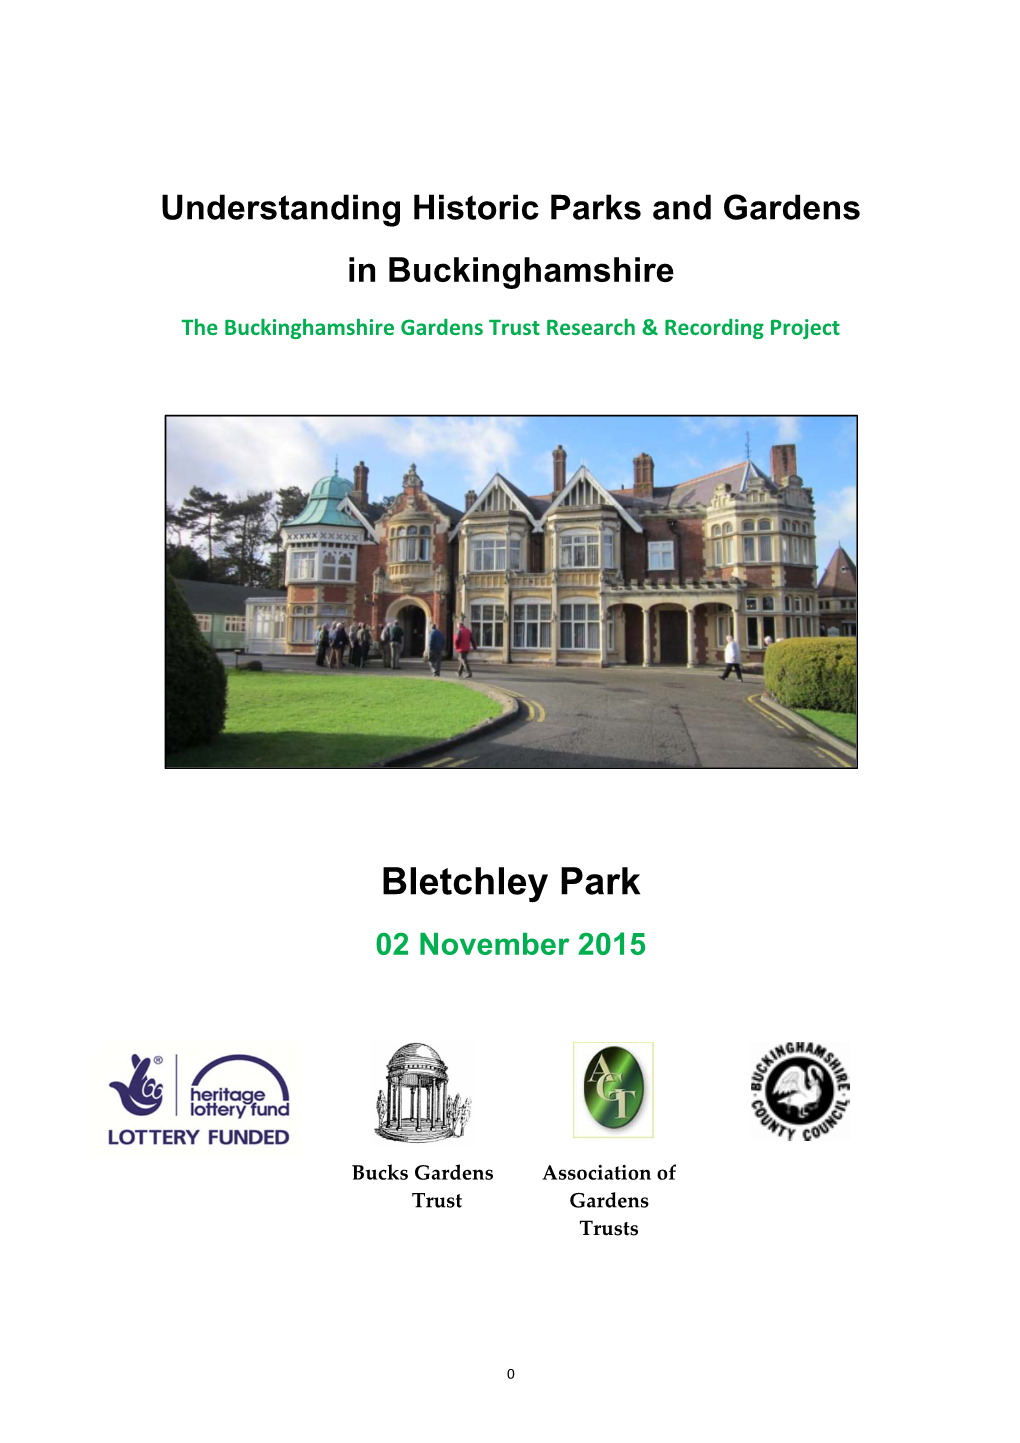 Bletchley Park 02 November 2015